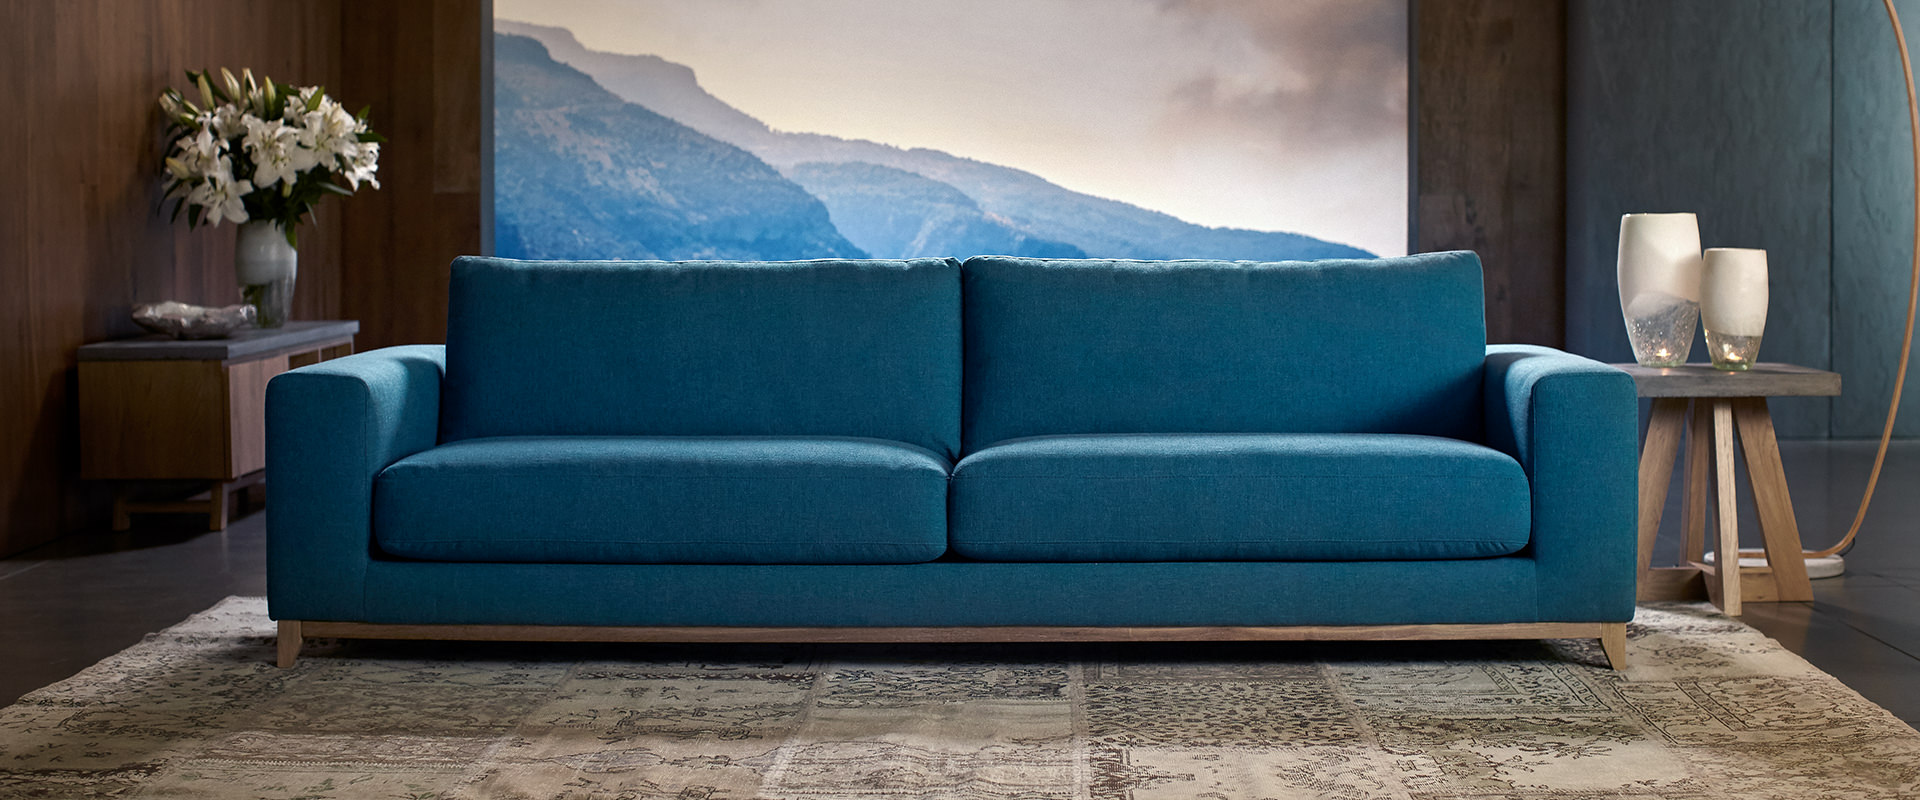 Fabric Sofa Modern Lounge Nick Scali